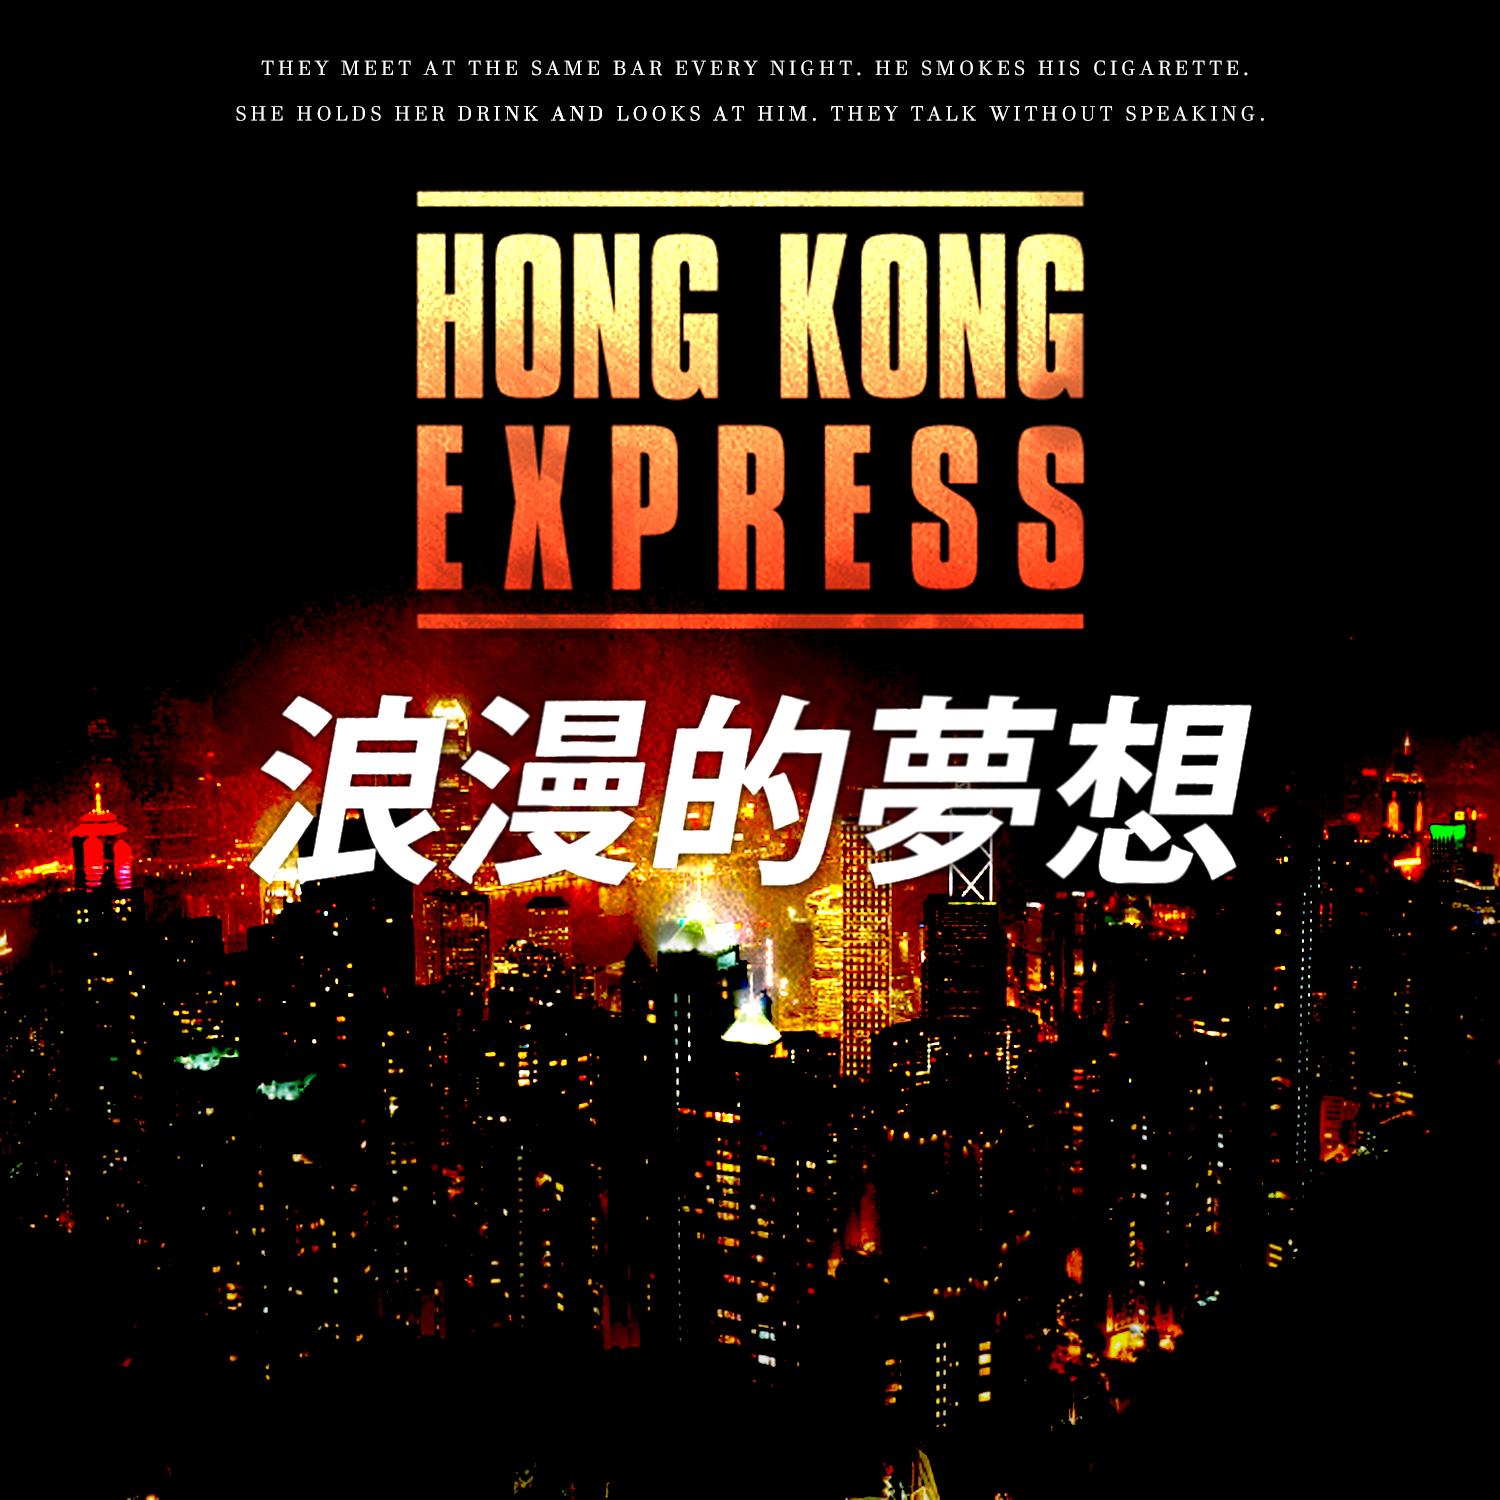 Hong Kong Express - 浪漫的夢想 (ROMANTIC DREAM)